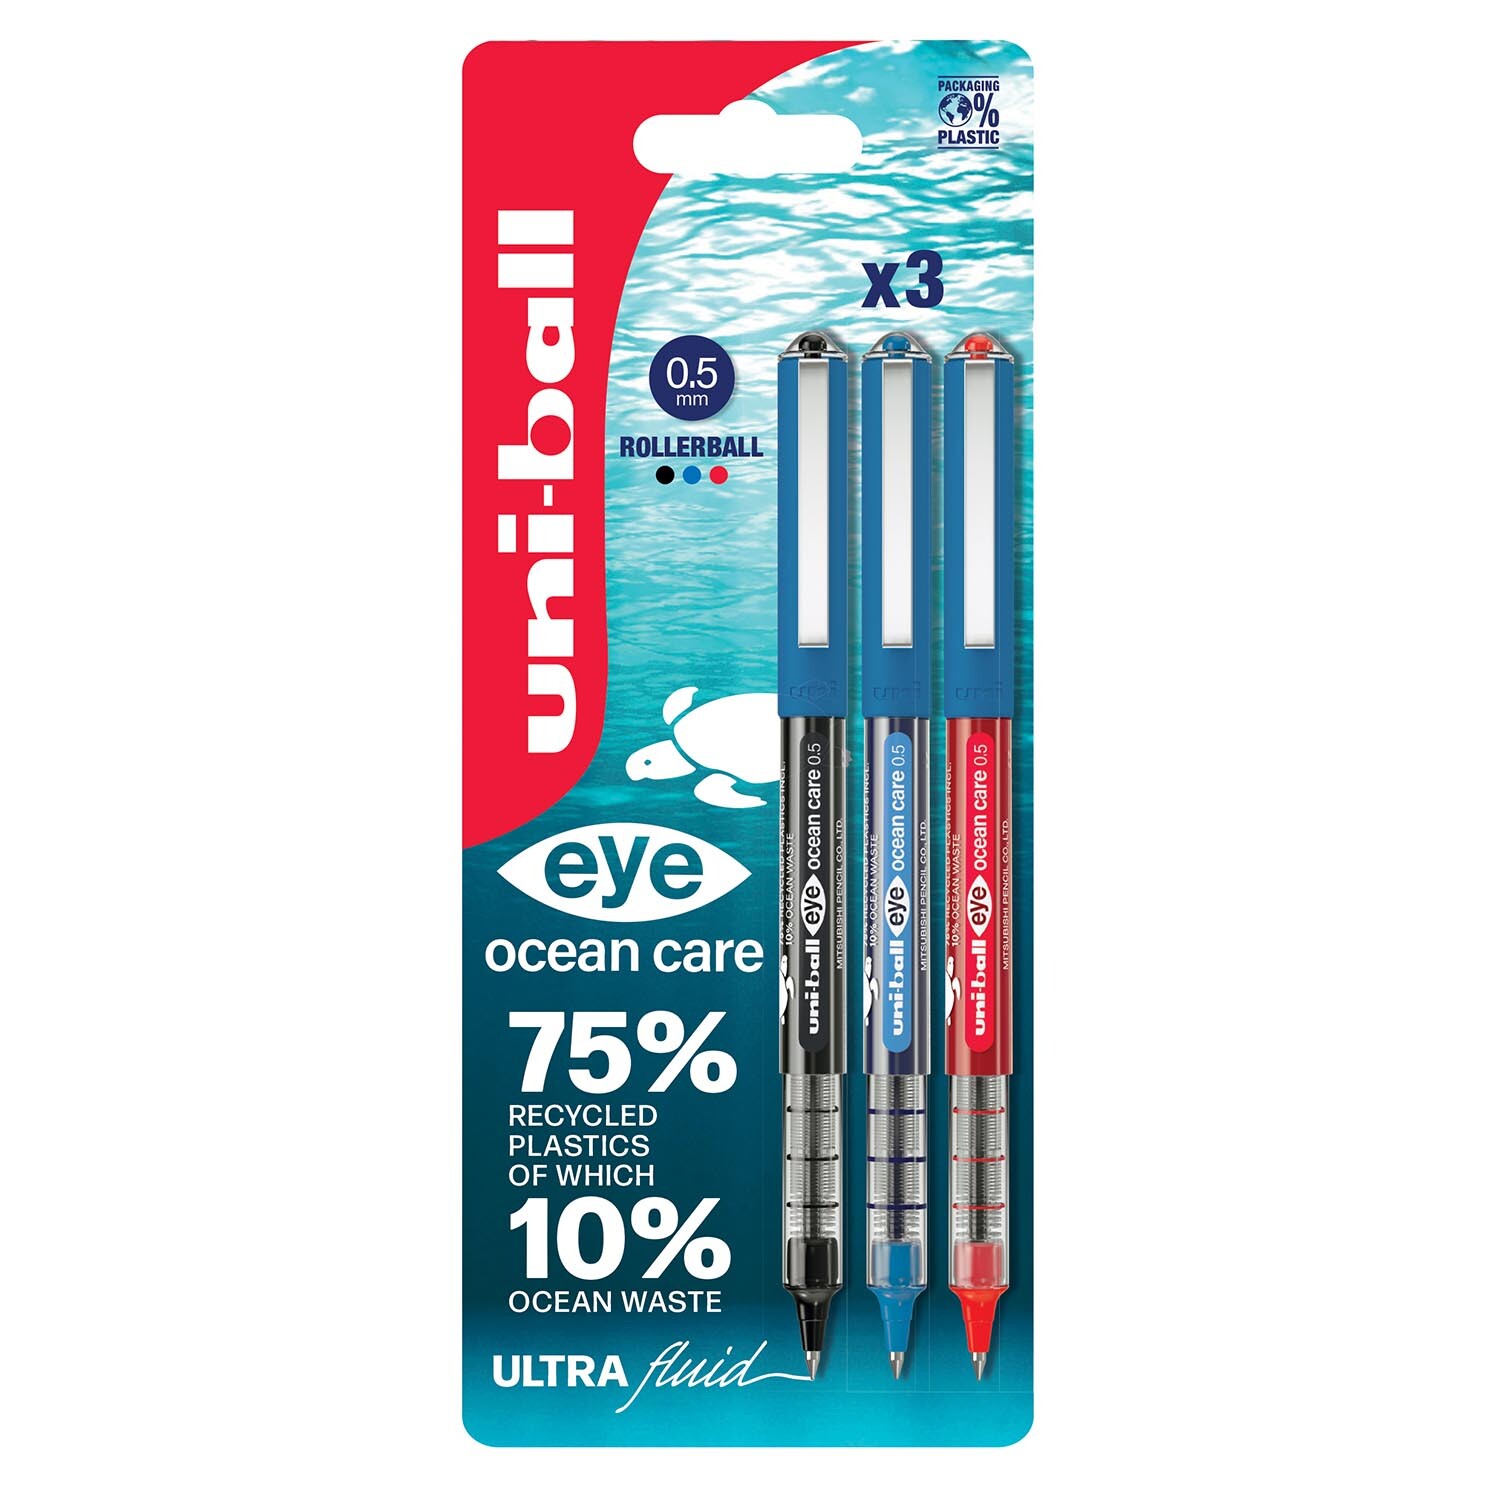 Uniball Assorted Eye Ocean Care Pen 3 Pack Image